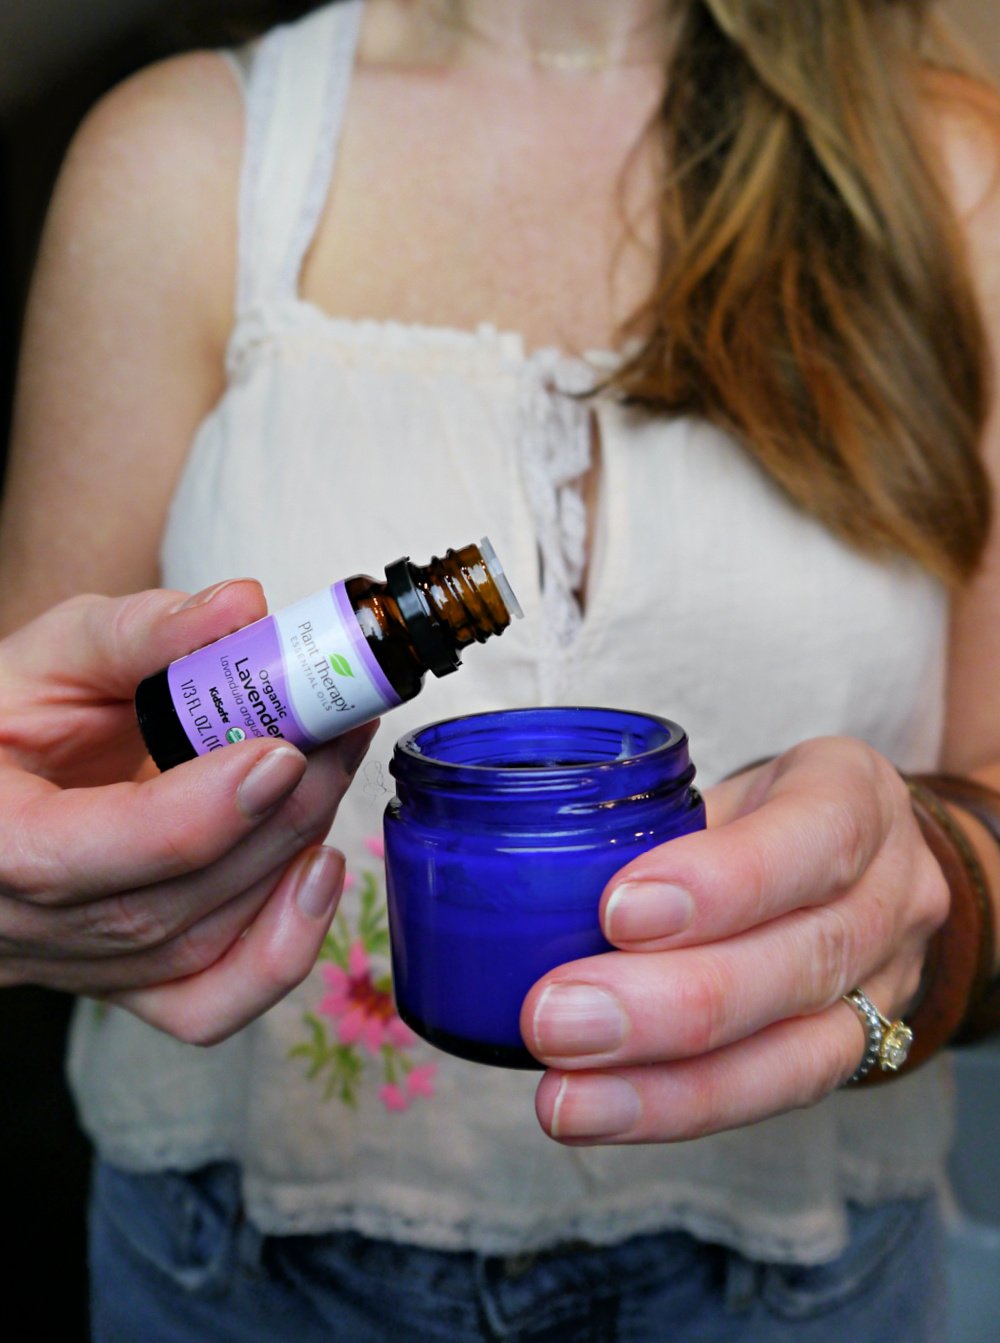 Woman dripping lavender essential oil into a blue jar.